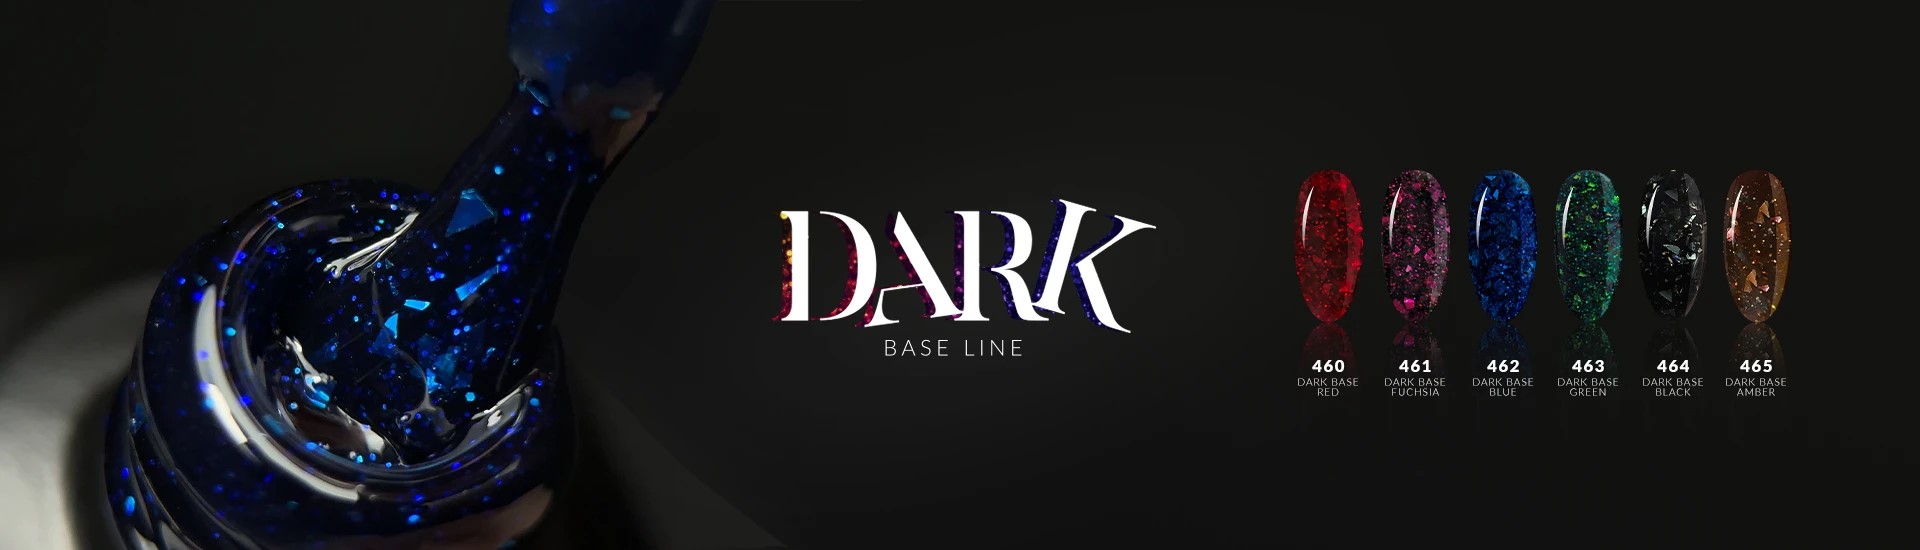 Dark Base Cover Line - Power Team